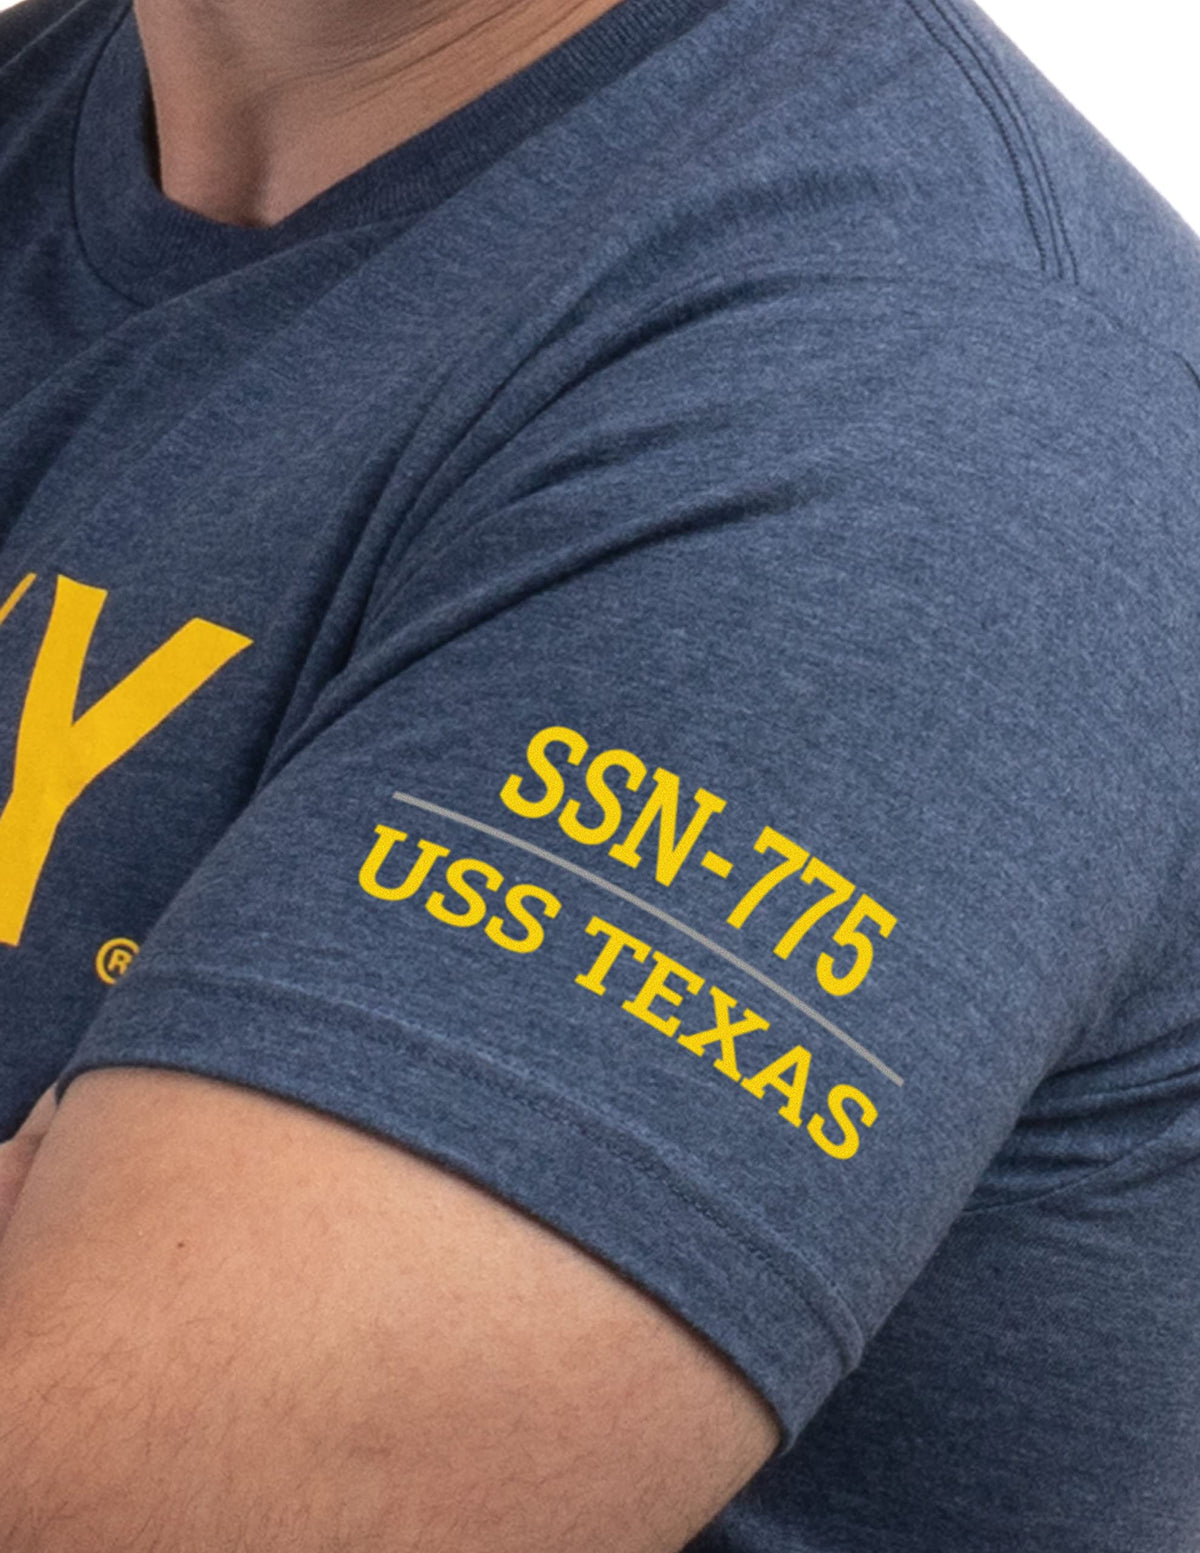 USS Texas, SSN-775 | U.S. Navy Sailor Veteran USN United States Naval T-shirt for Men Women